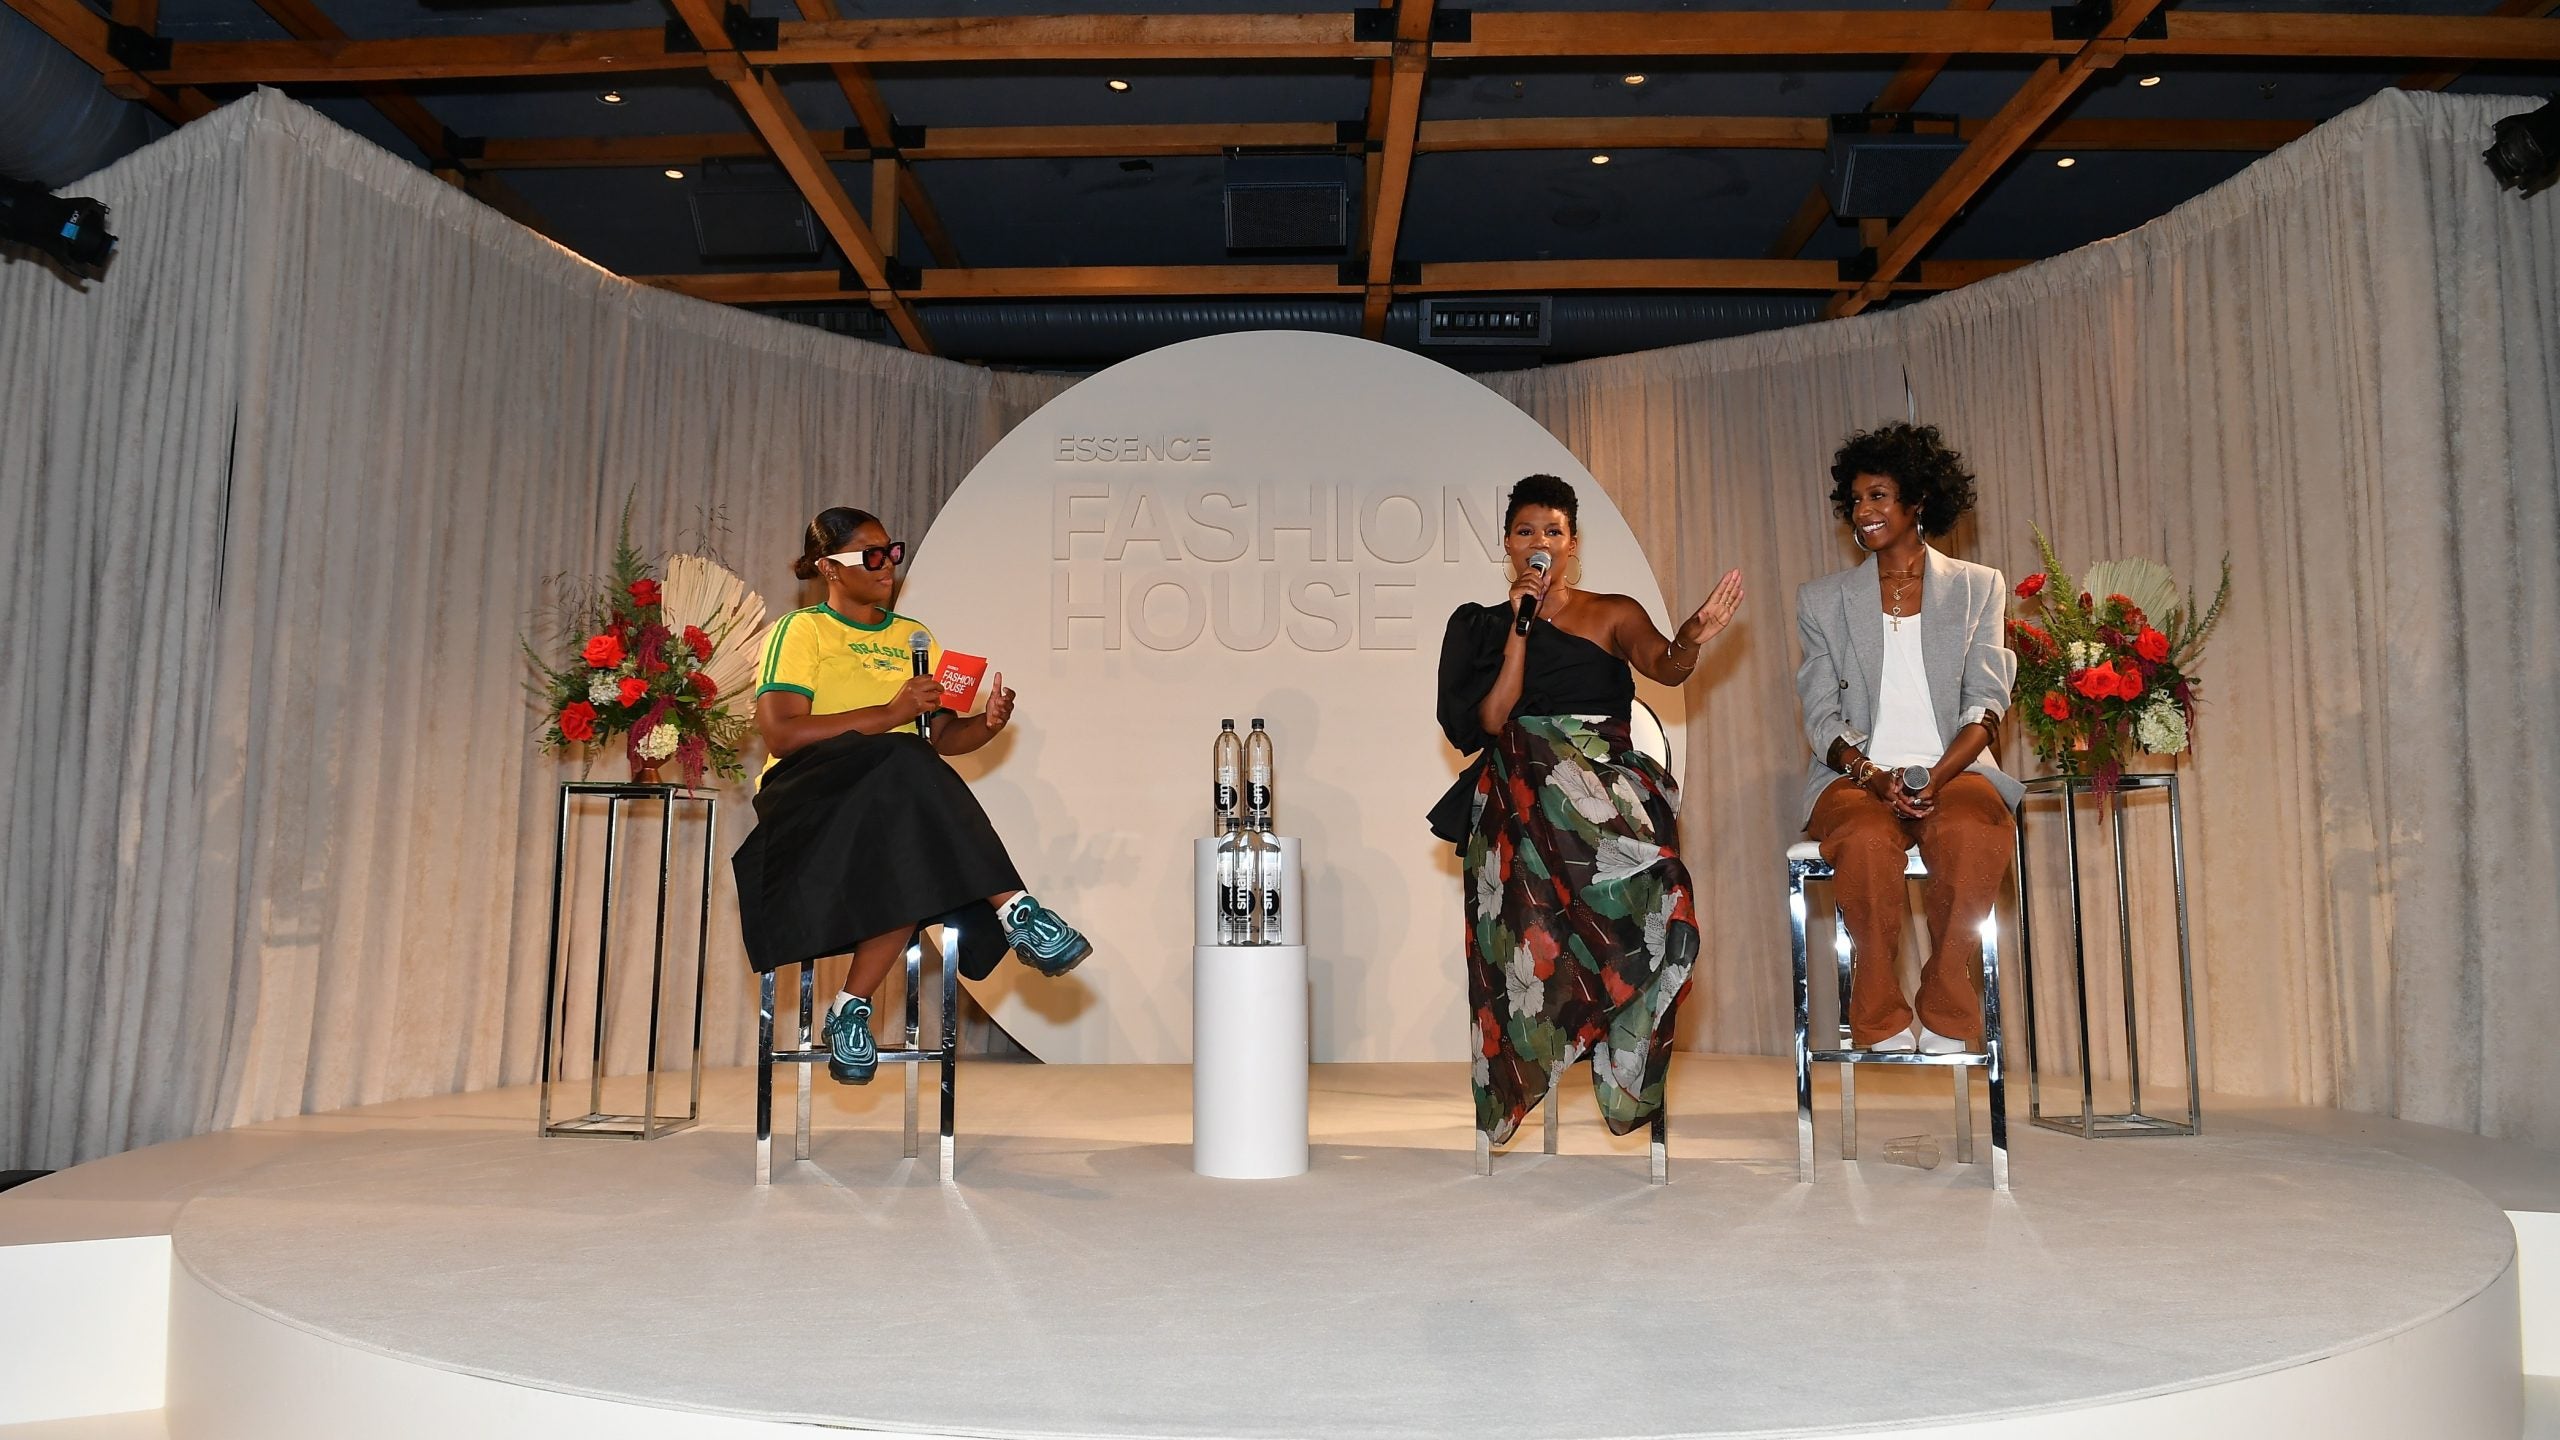 ESSENCE Fashion House: Jamillah Davis Hernandez and Devan Wallace On Mental Health In Black Fashion